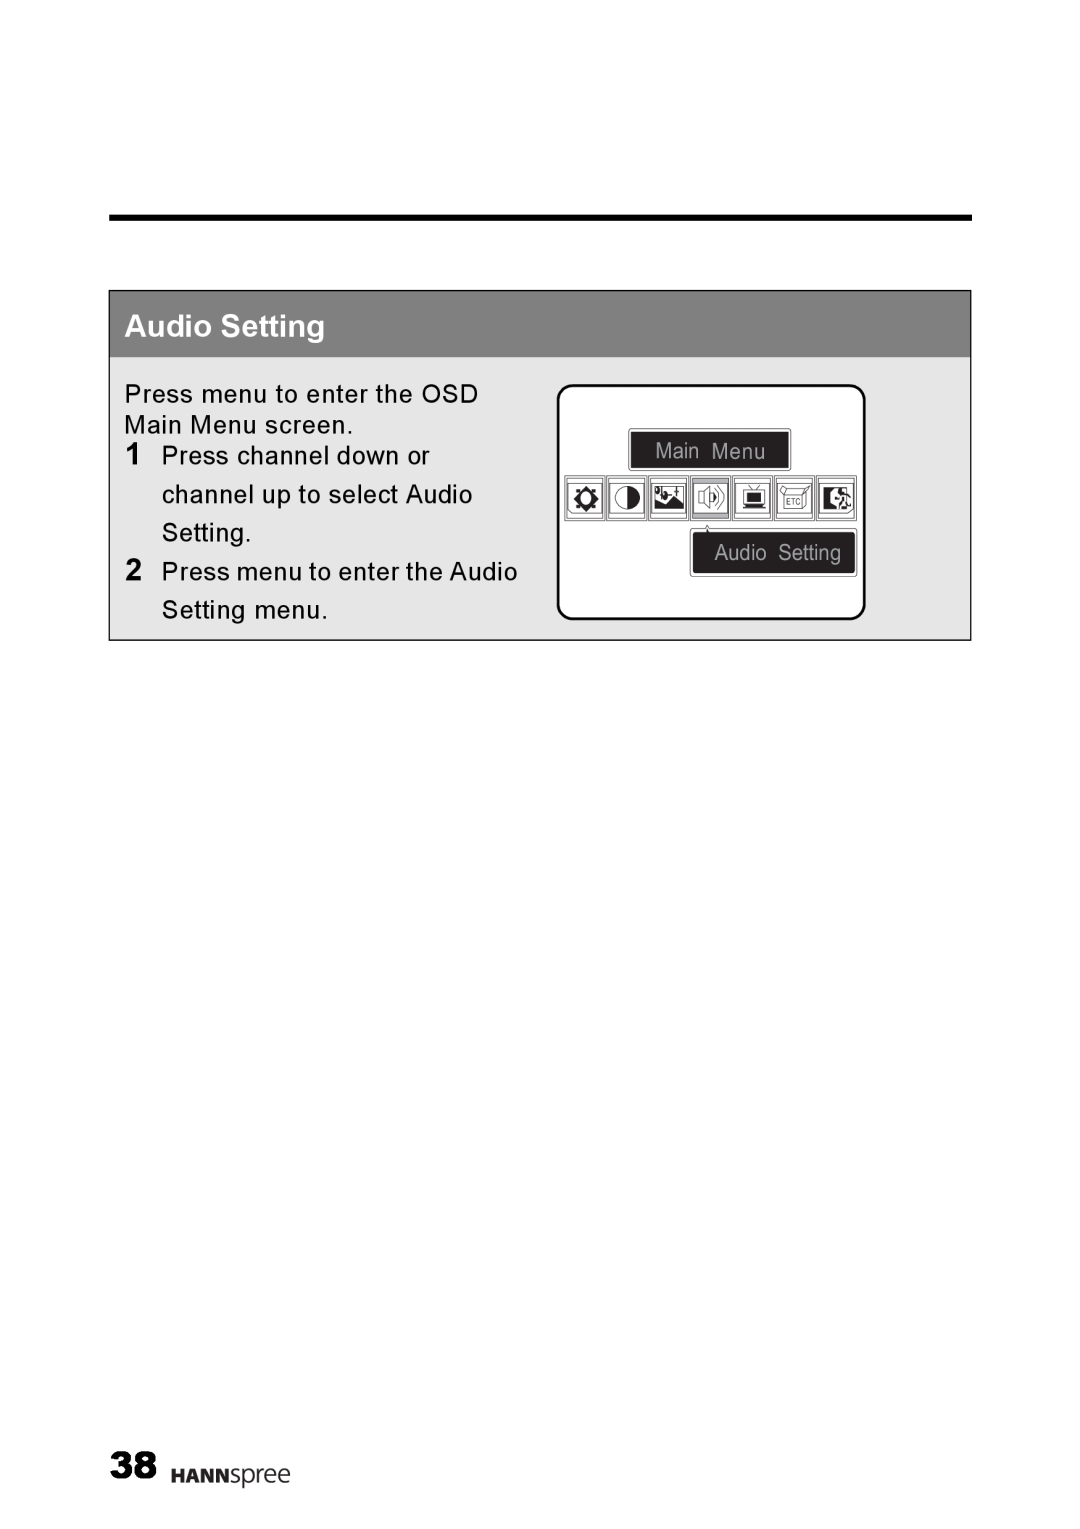 HANNspree LT09-10U1-000 user manual Audio Setting, Press menu to enter the OSD Main Menu screen 